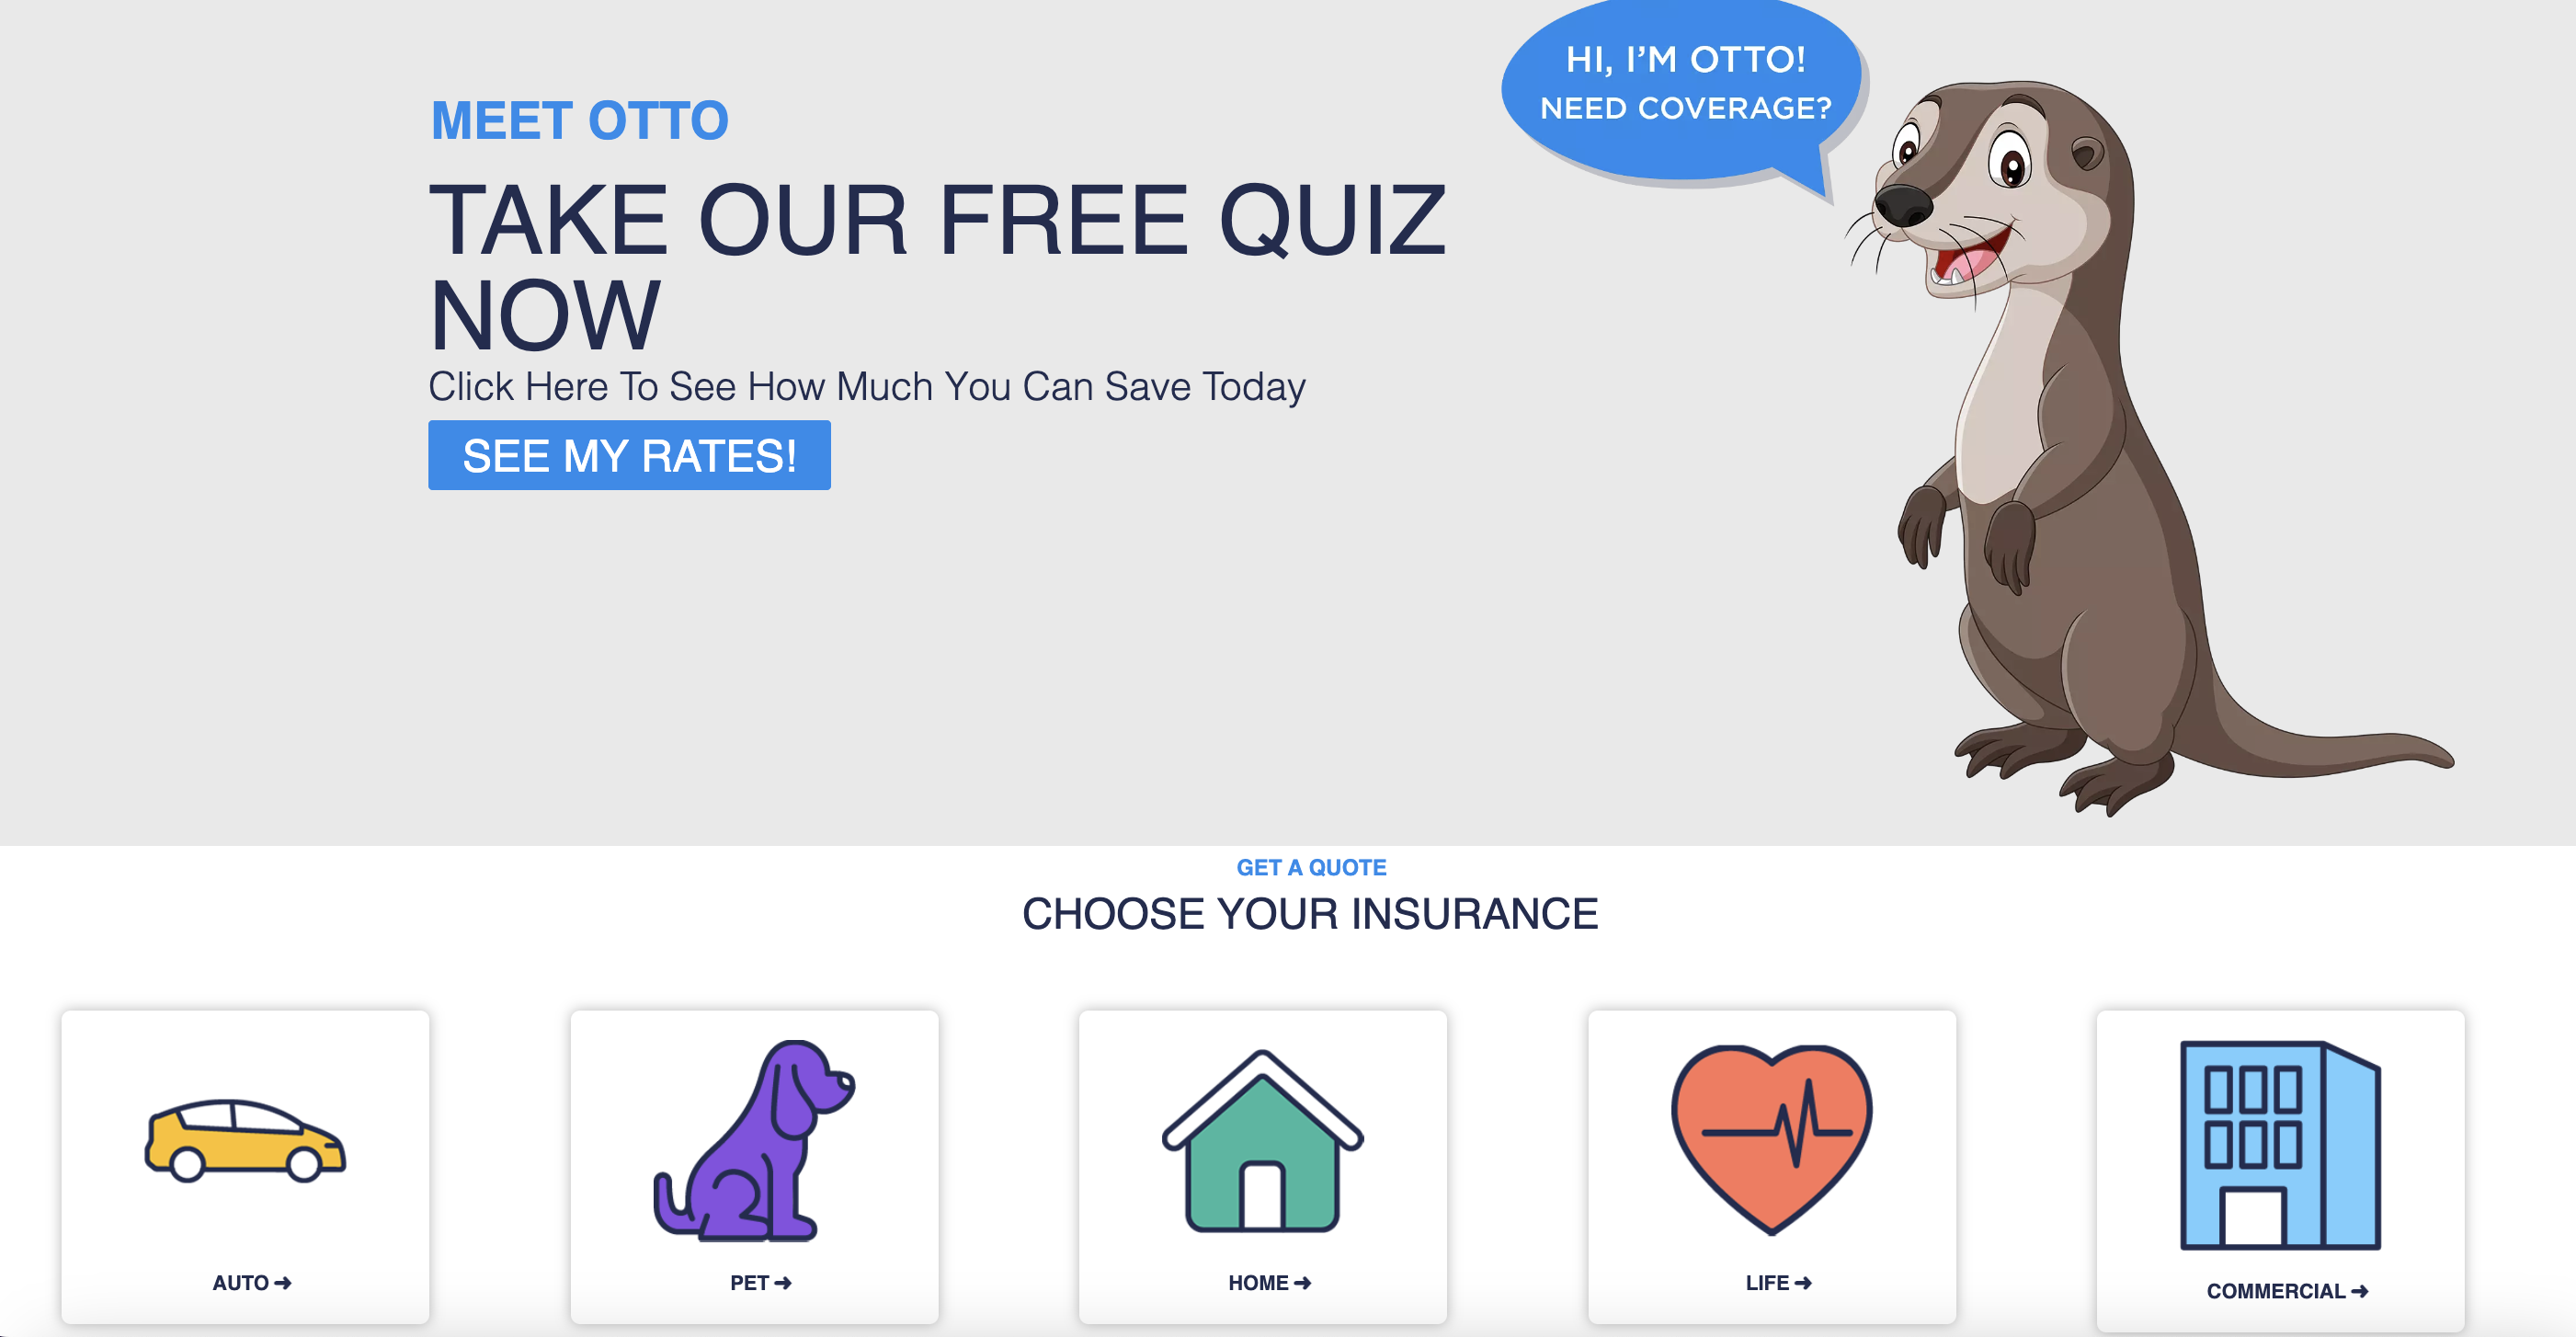 Otto Insurance reviews